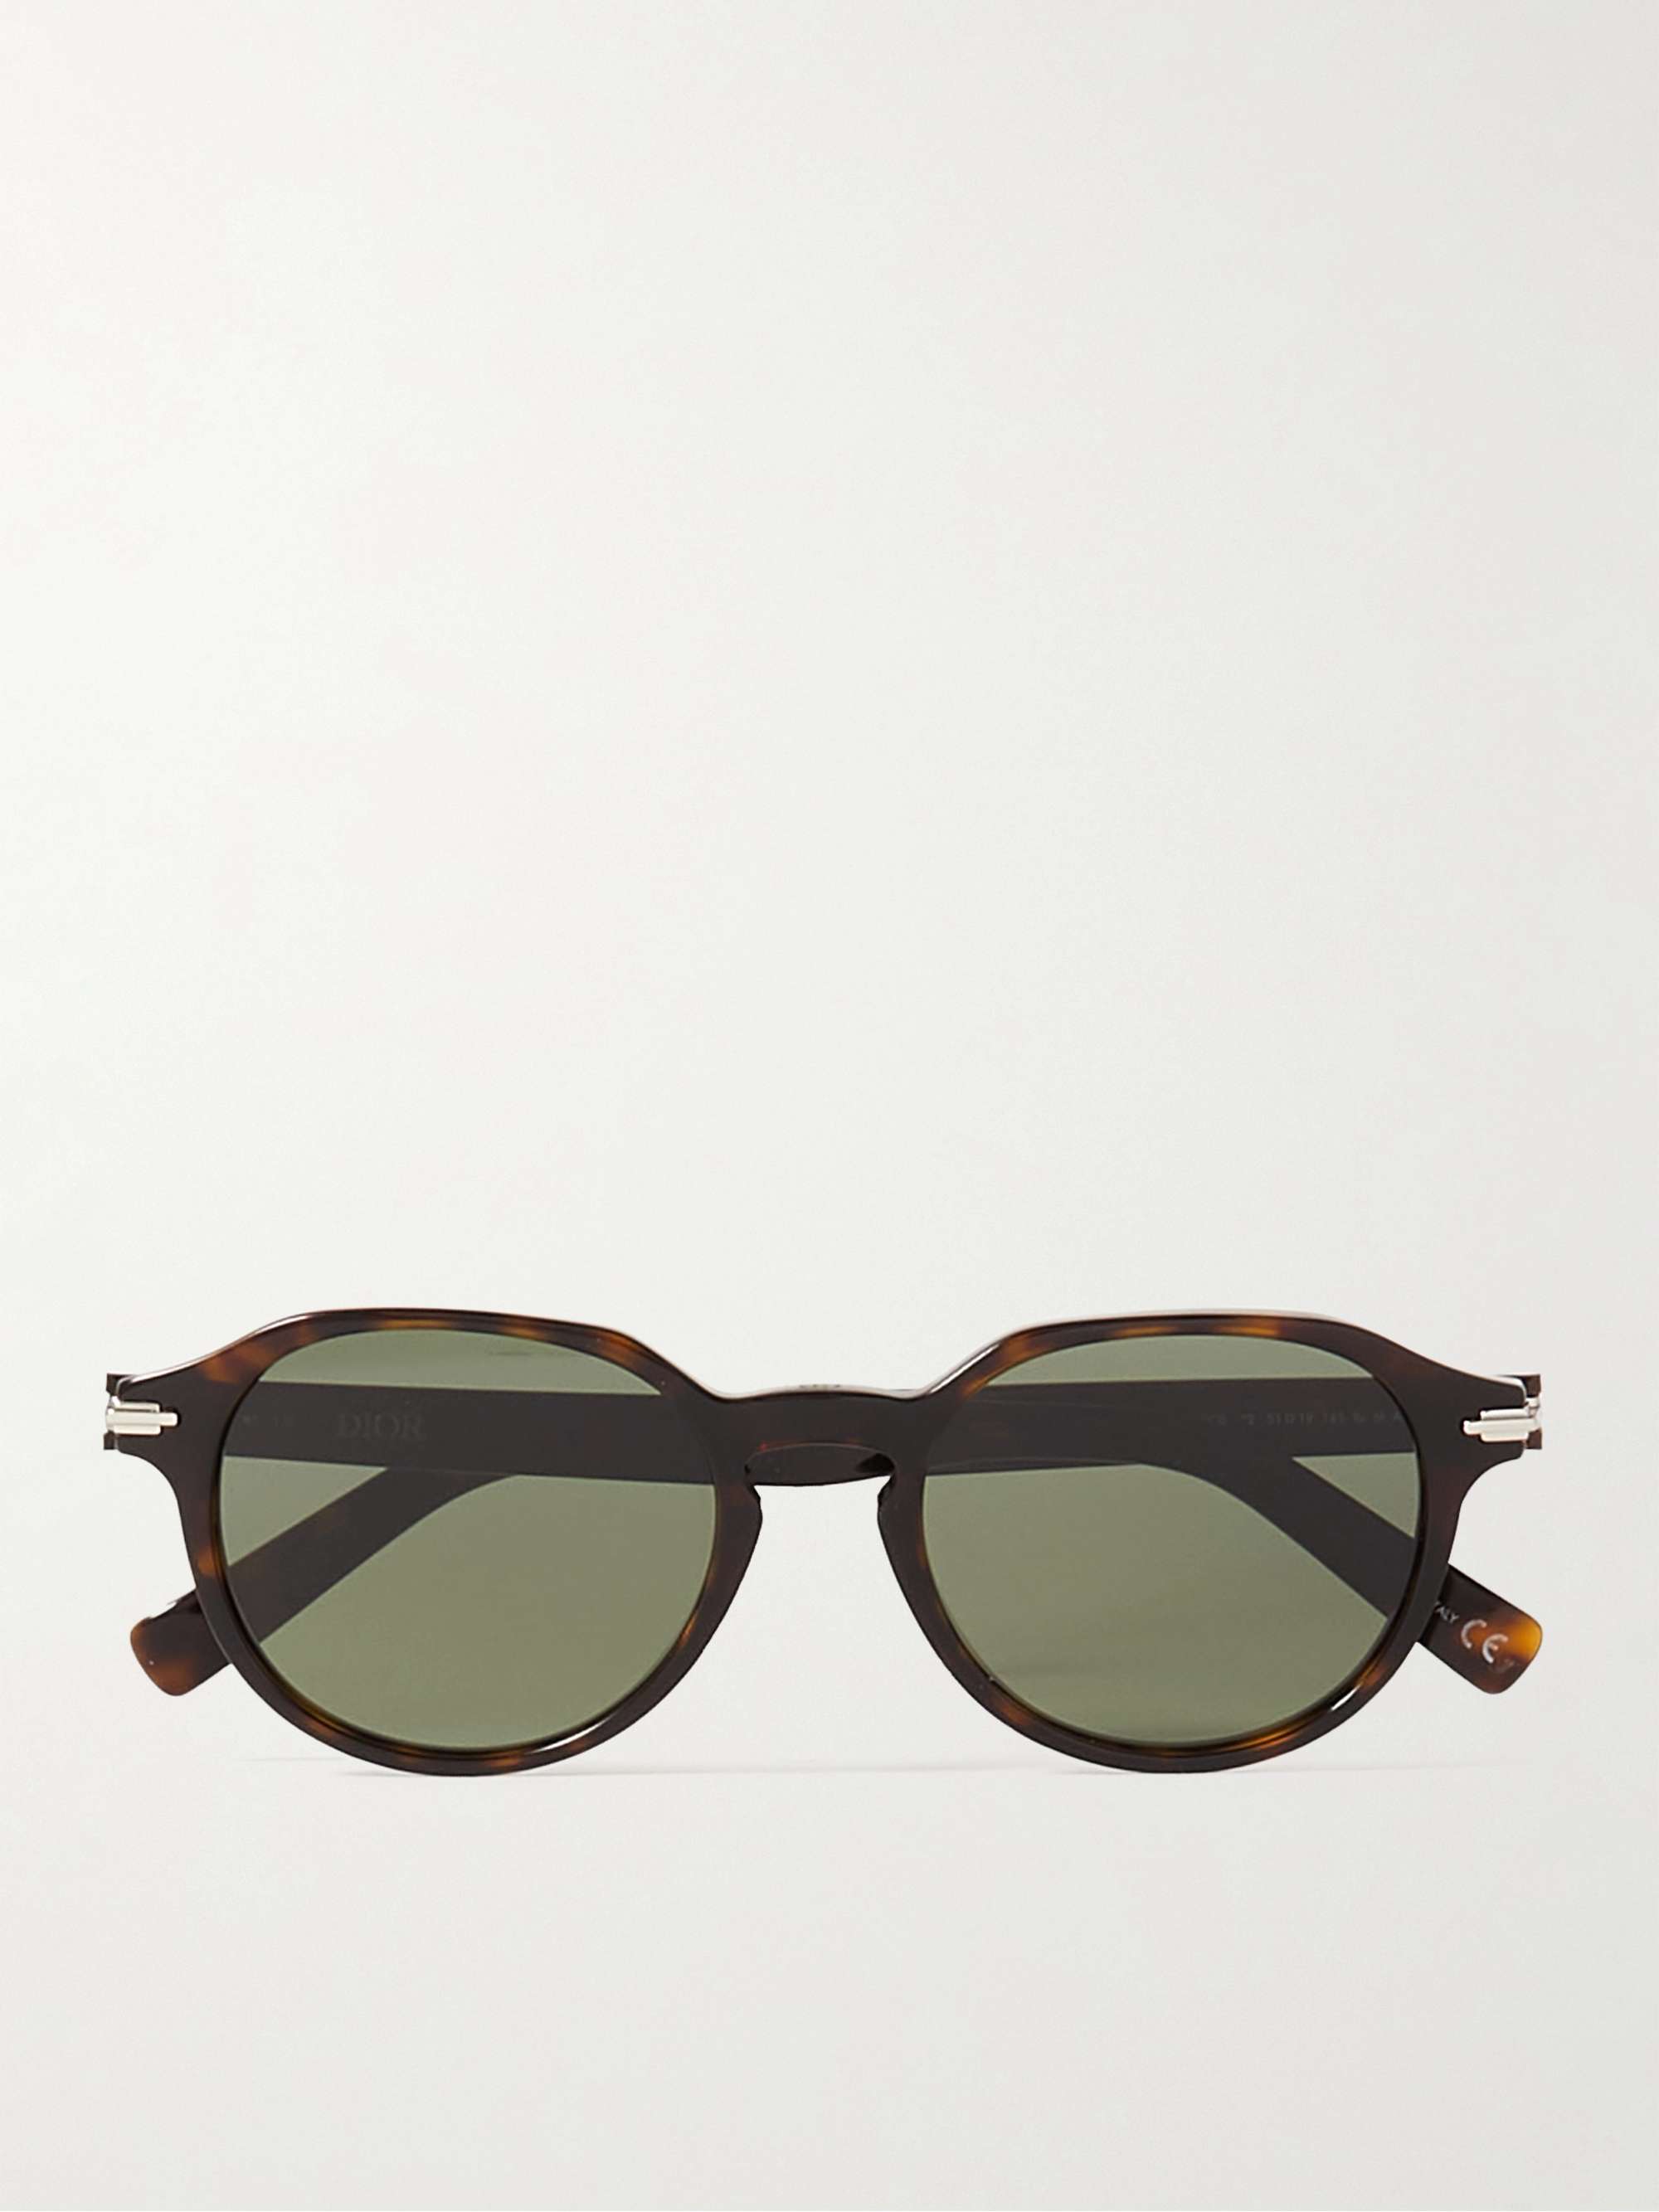 DIOR EYEWEAR DiorBlackSuit R2I Round-Frame Tortoiseshell Acetate Sunglasses